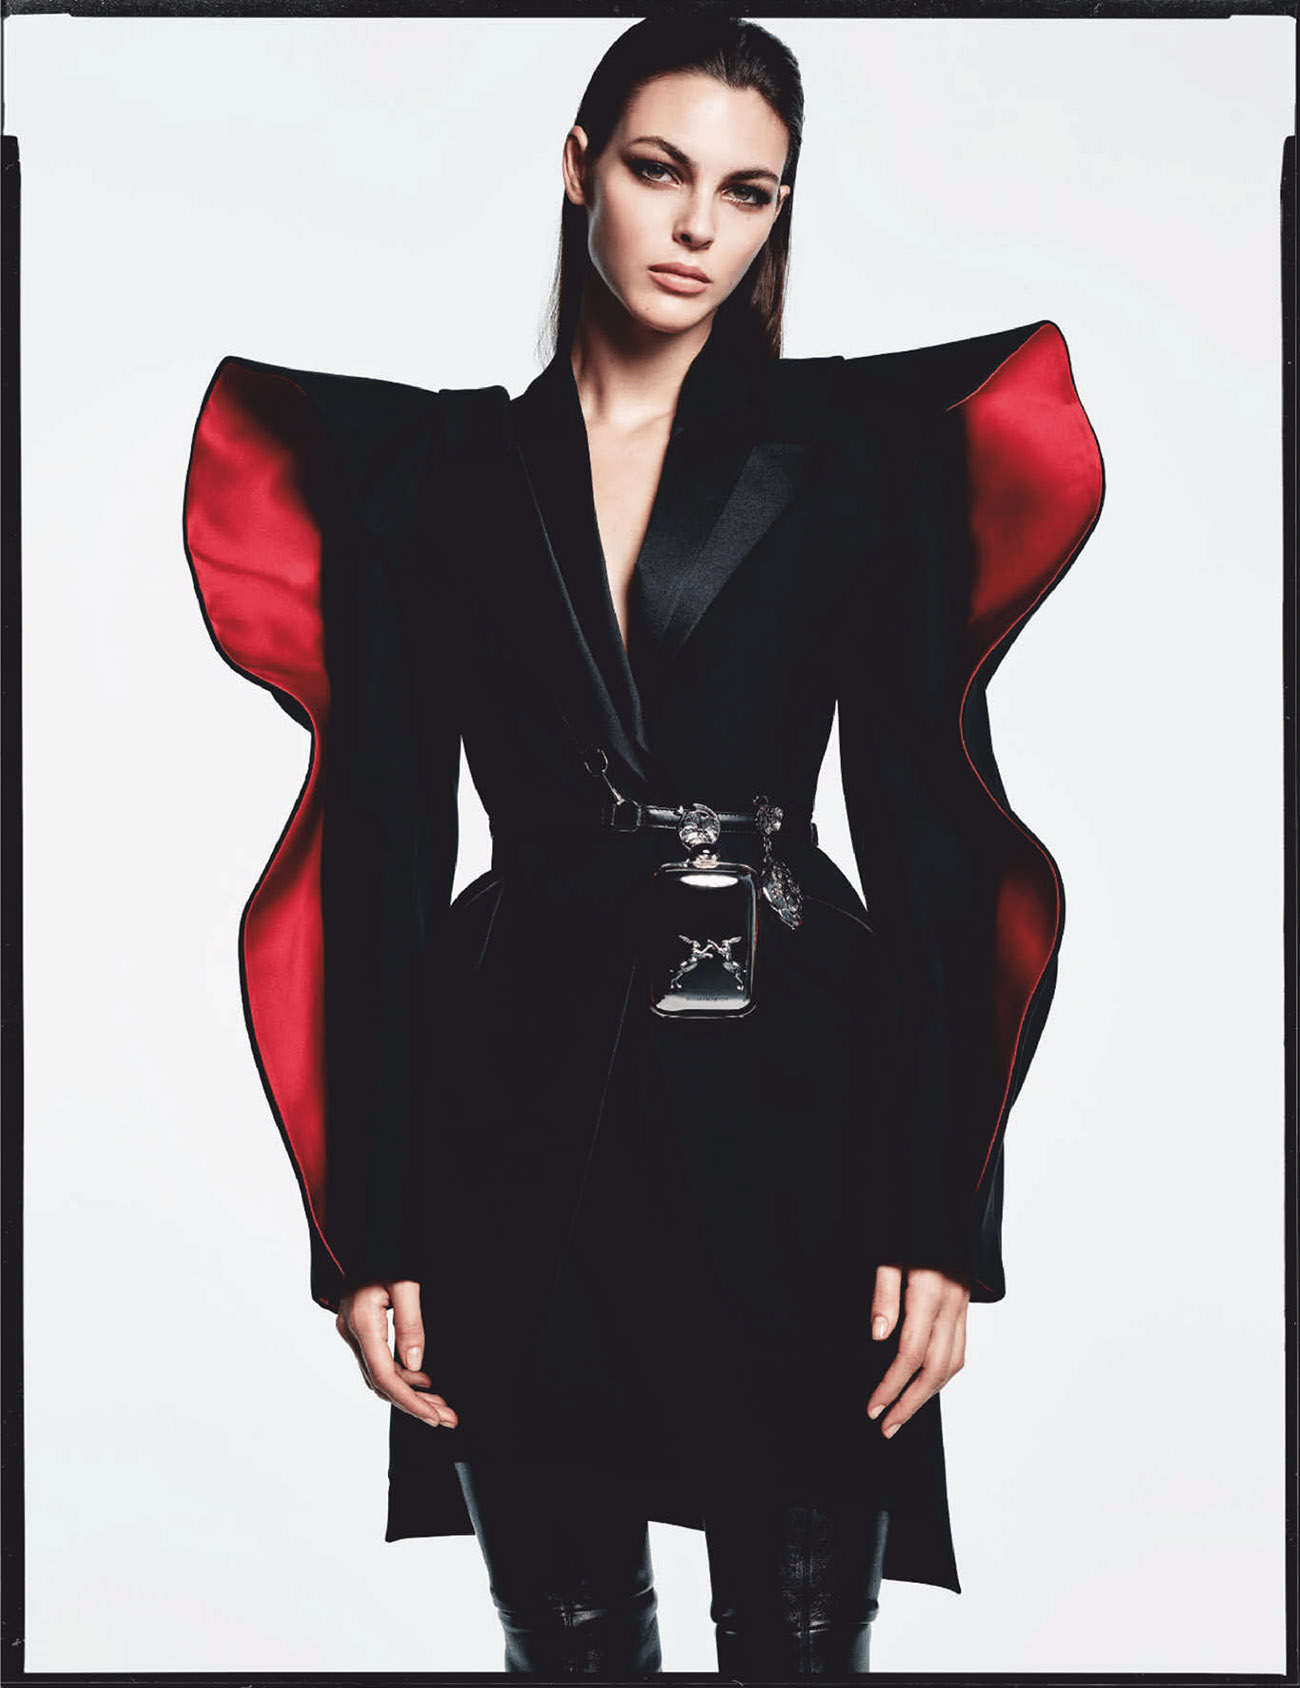 Vittoria Ceretti by Luigi & Iango for Vogue Japan October 2020